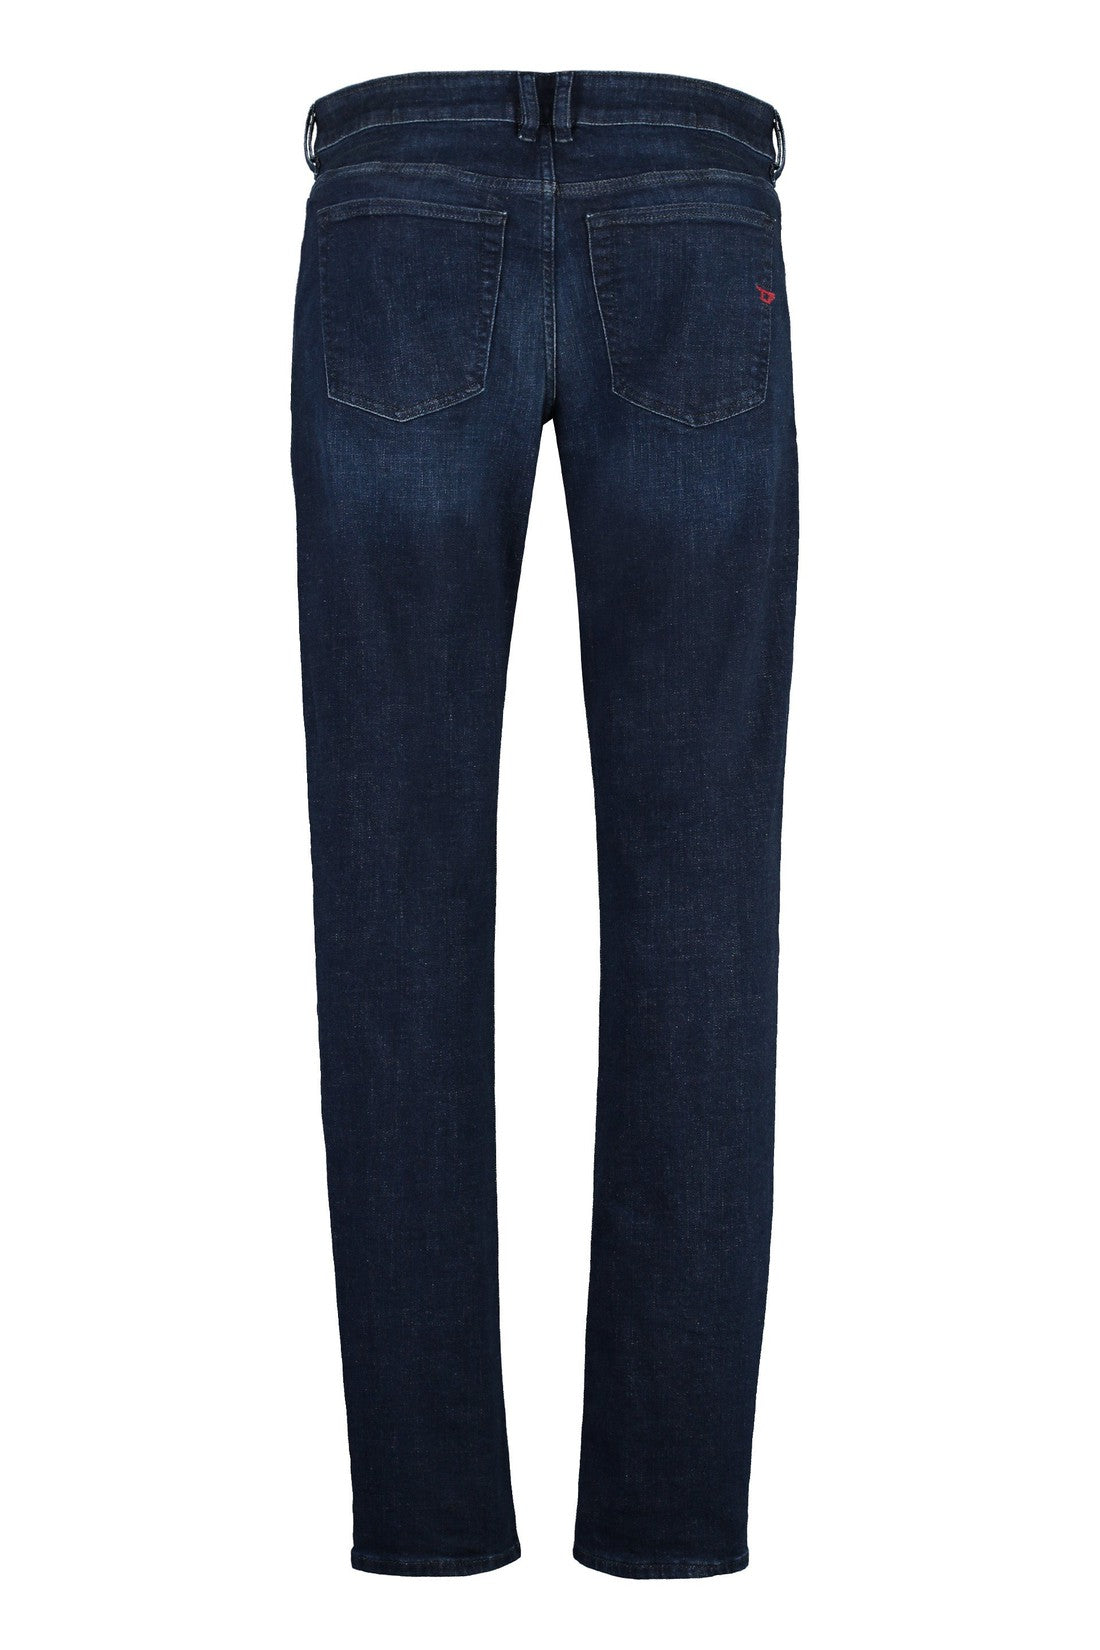 DIESEL-OUTLET-SALE-1979 Sleenker skinny jeans-ARCHIVIST